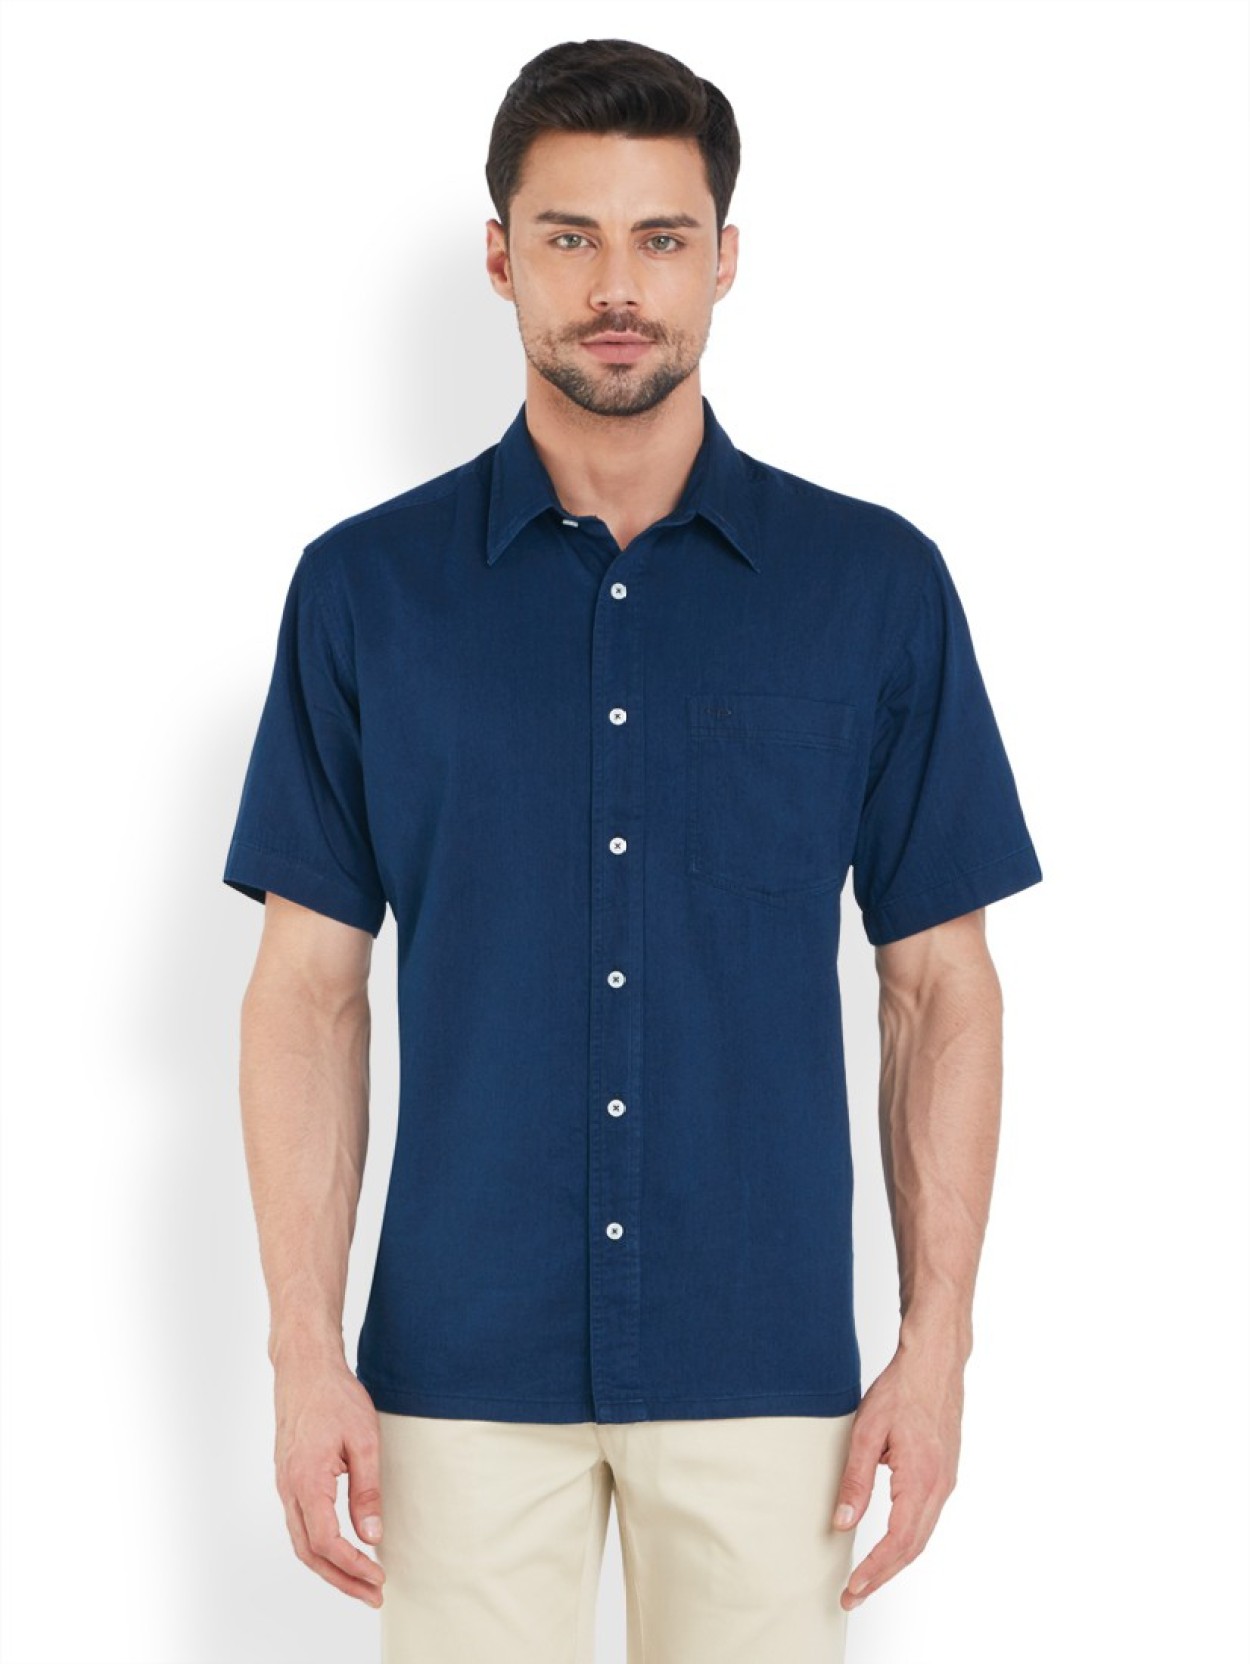 ColorPlus Men's Solid Casual Dark Blue Shirt - Buy Dark Blue ColorPlus ...